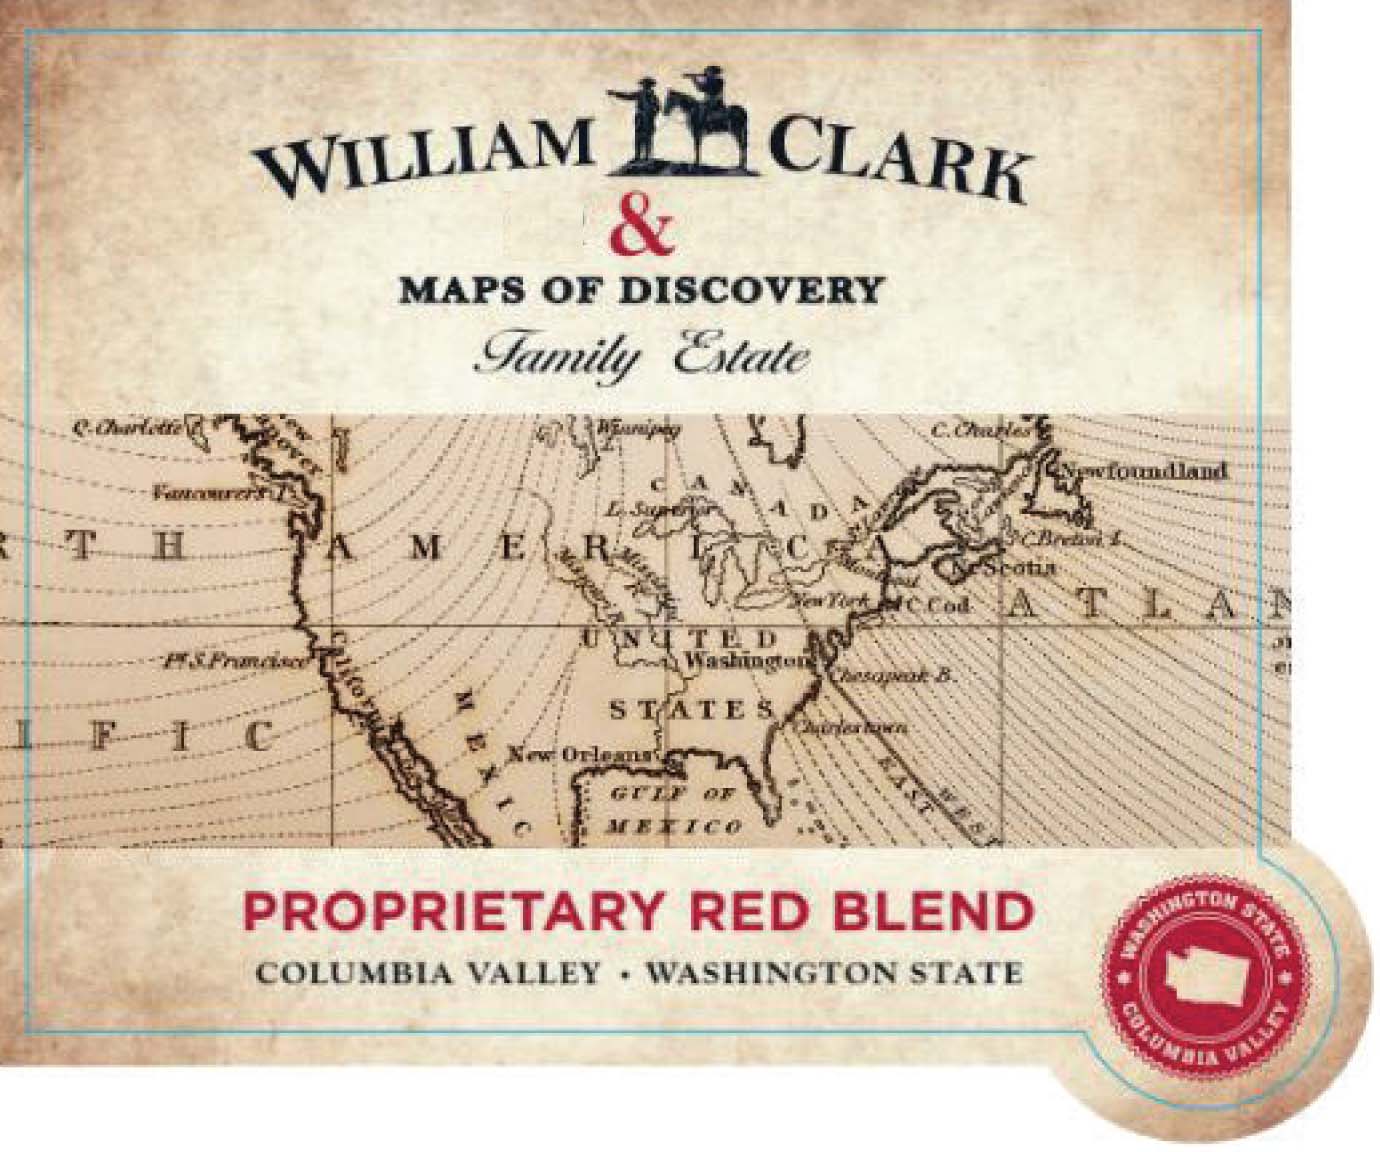 William Clark - Proprietary Red Blend label